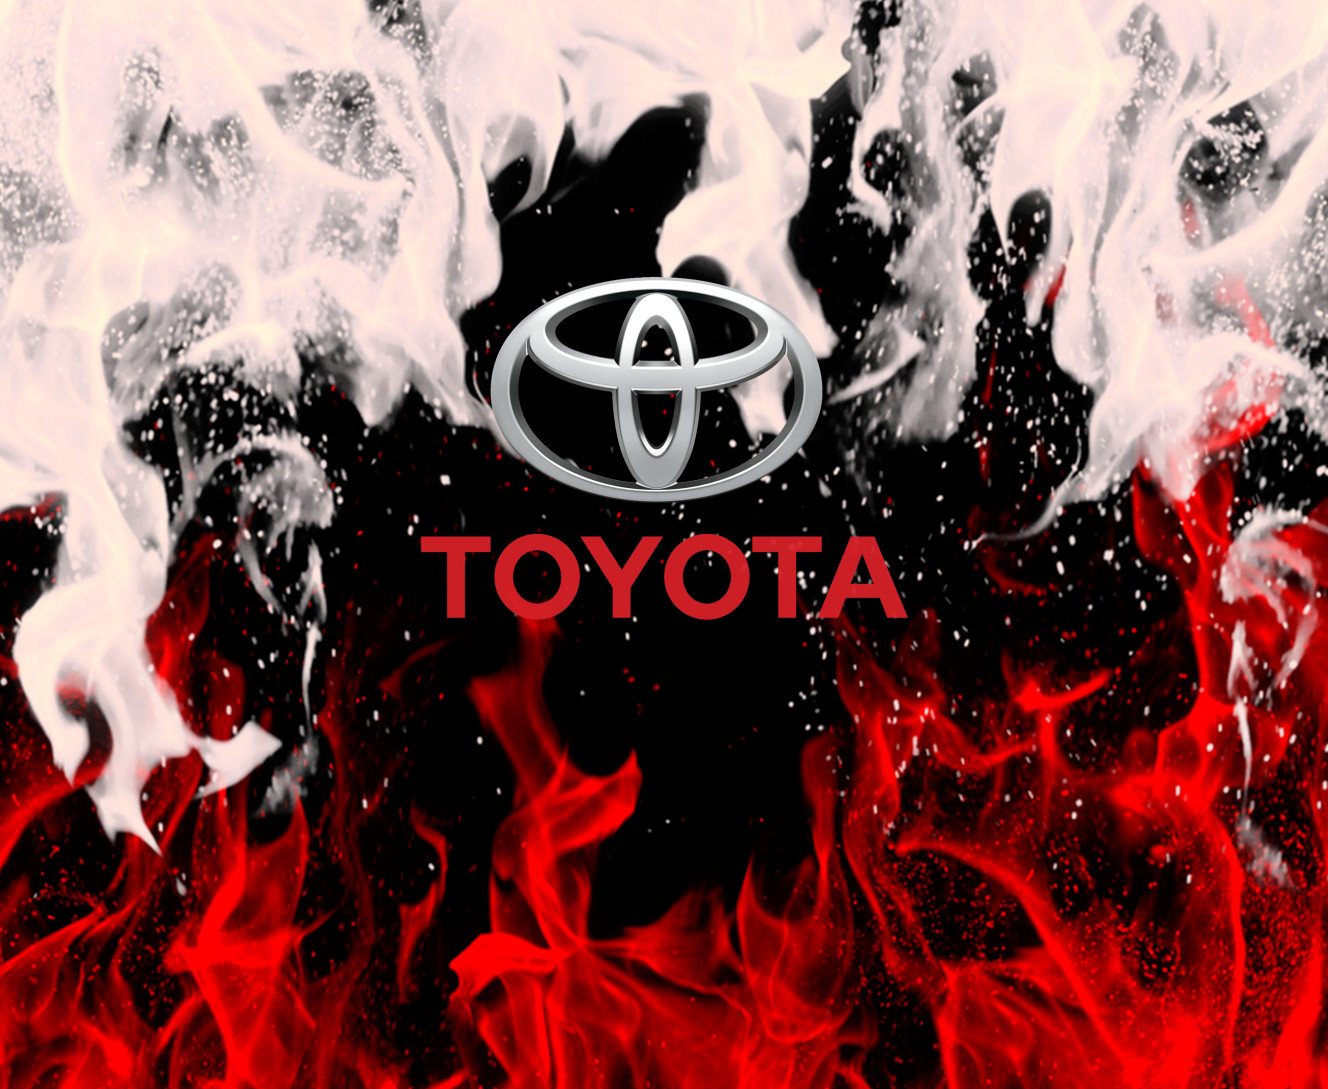 Toyota - Килимок для Миші - Toyota [4] - Mfest